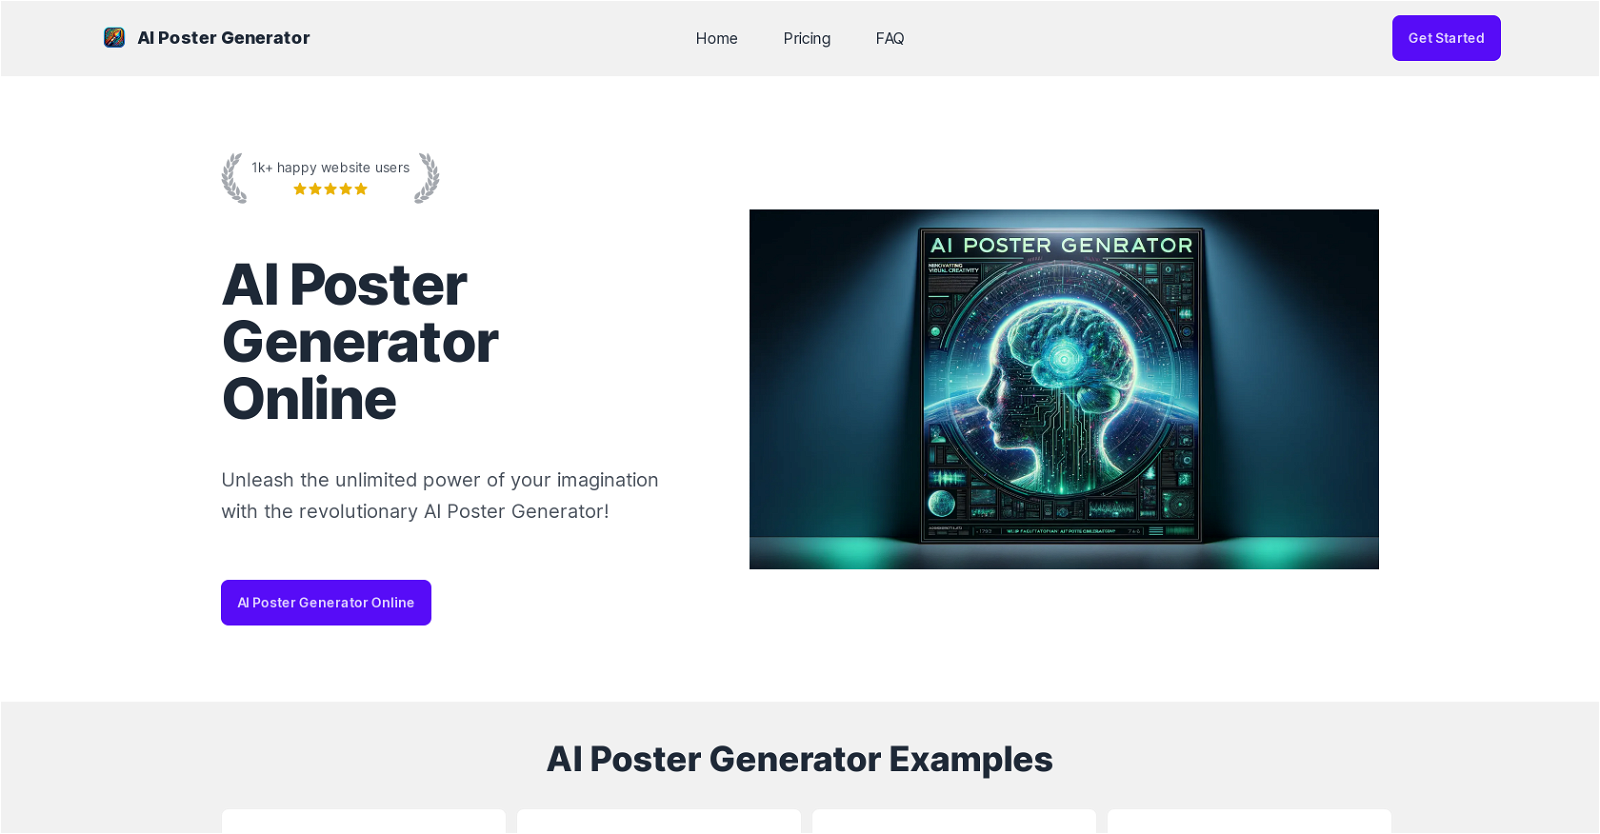 AIPosterGenerator website